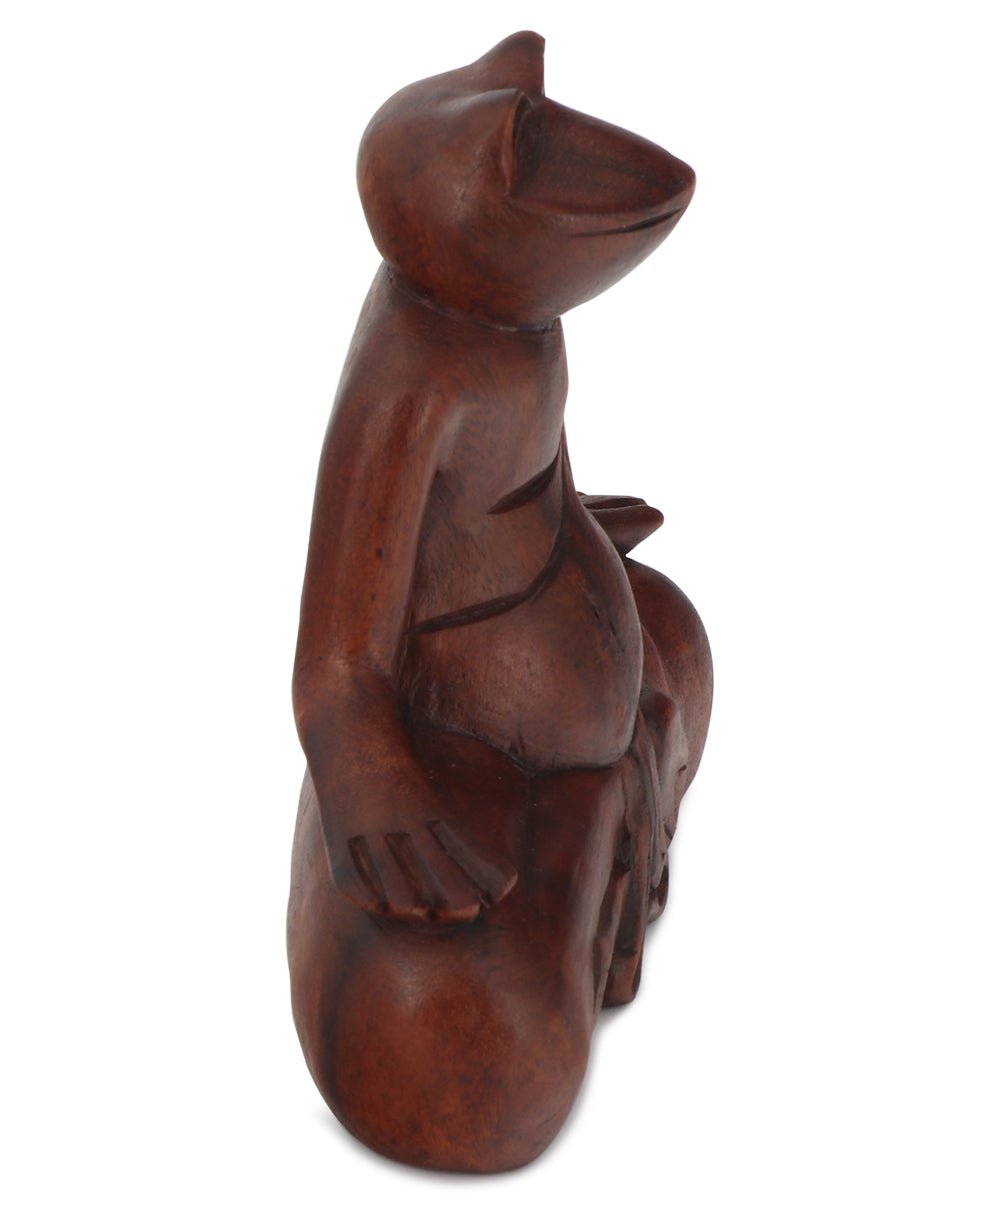 Hand Carved Wood Meditating Frog Statue - Sculptures & Statues